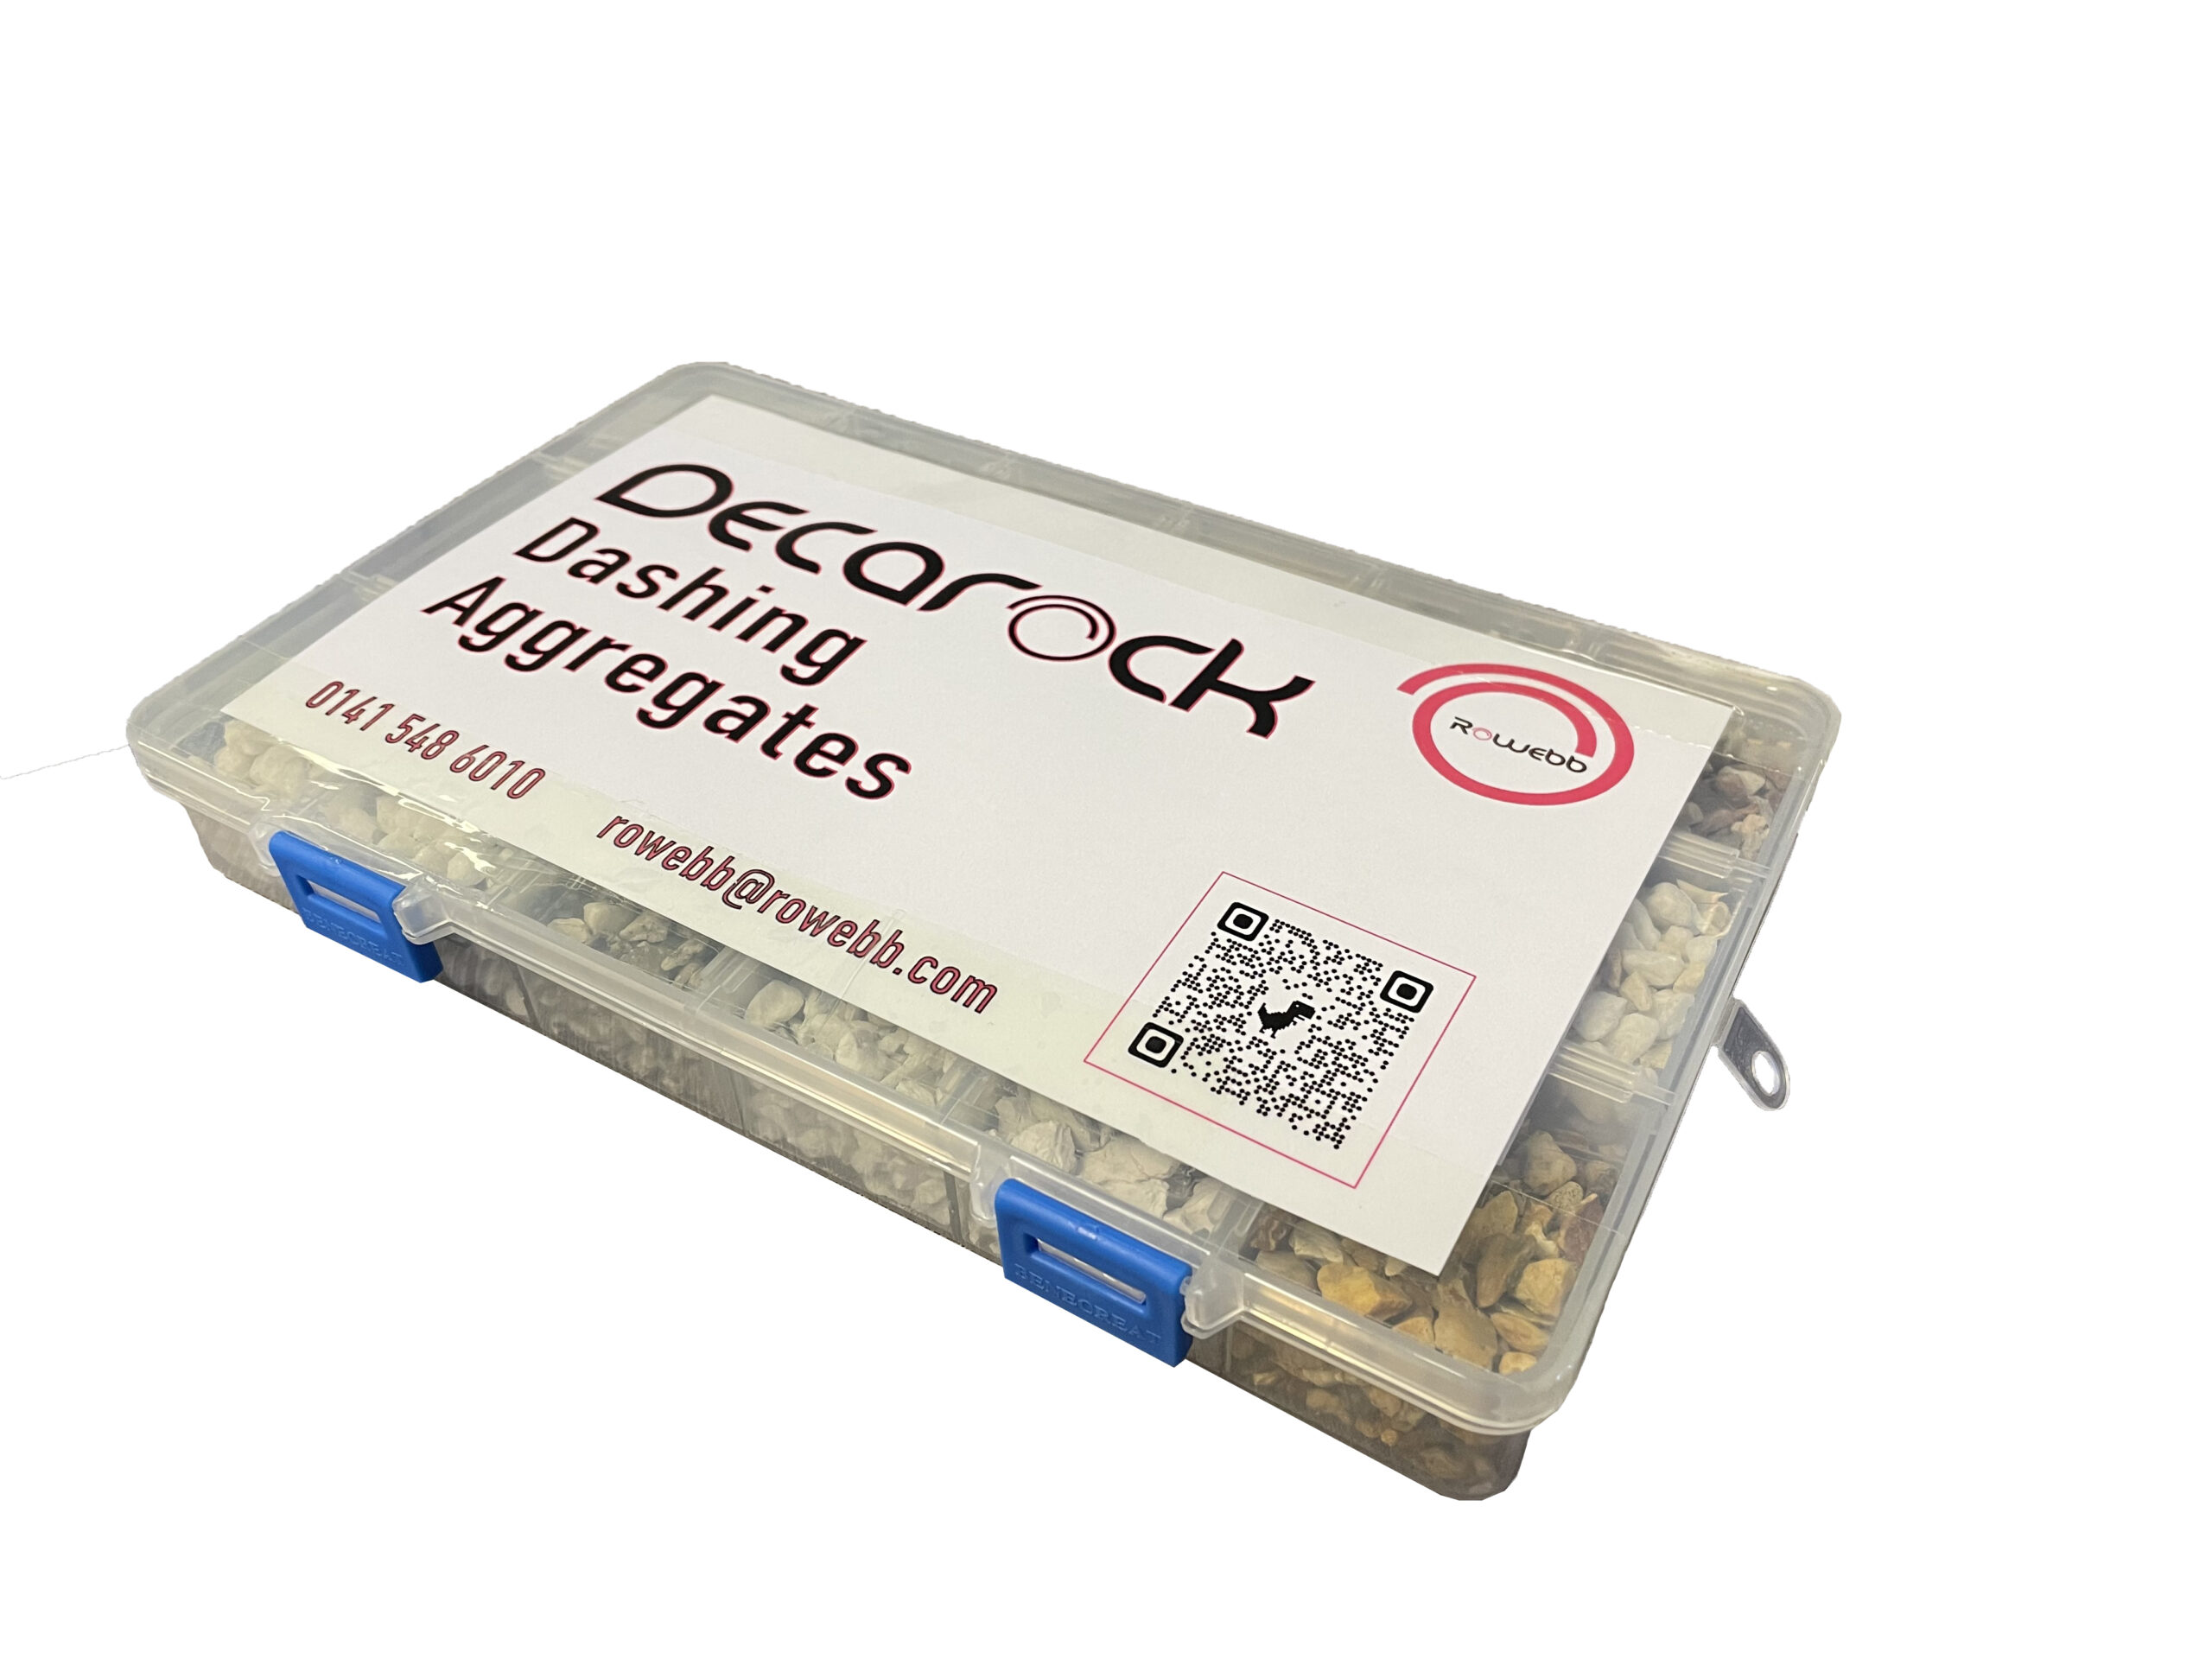 Decarock Sample Chip Box - Rowebb